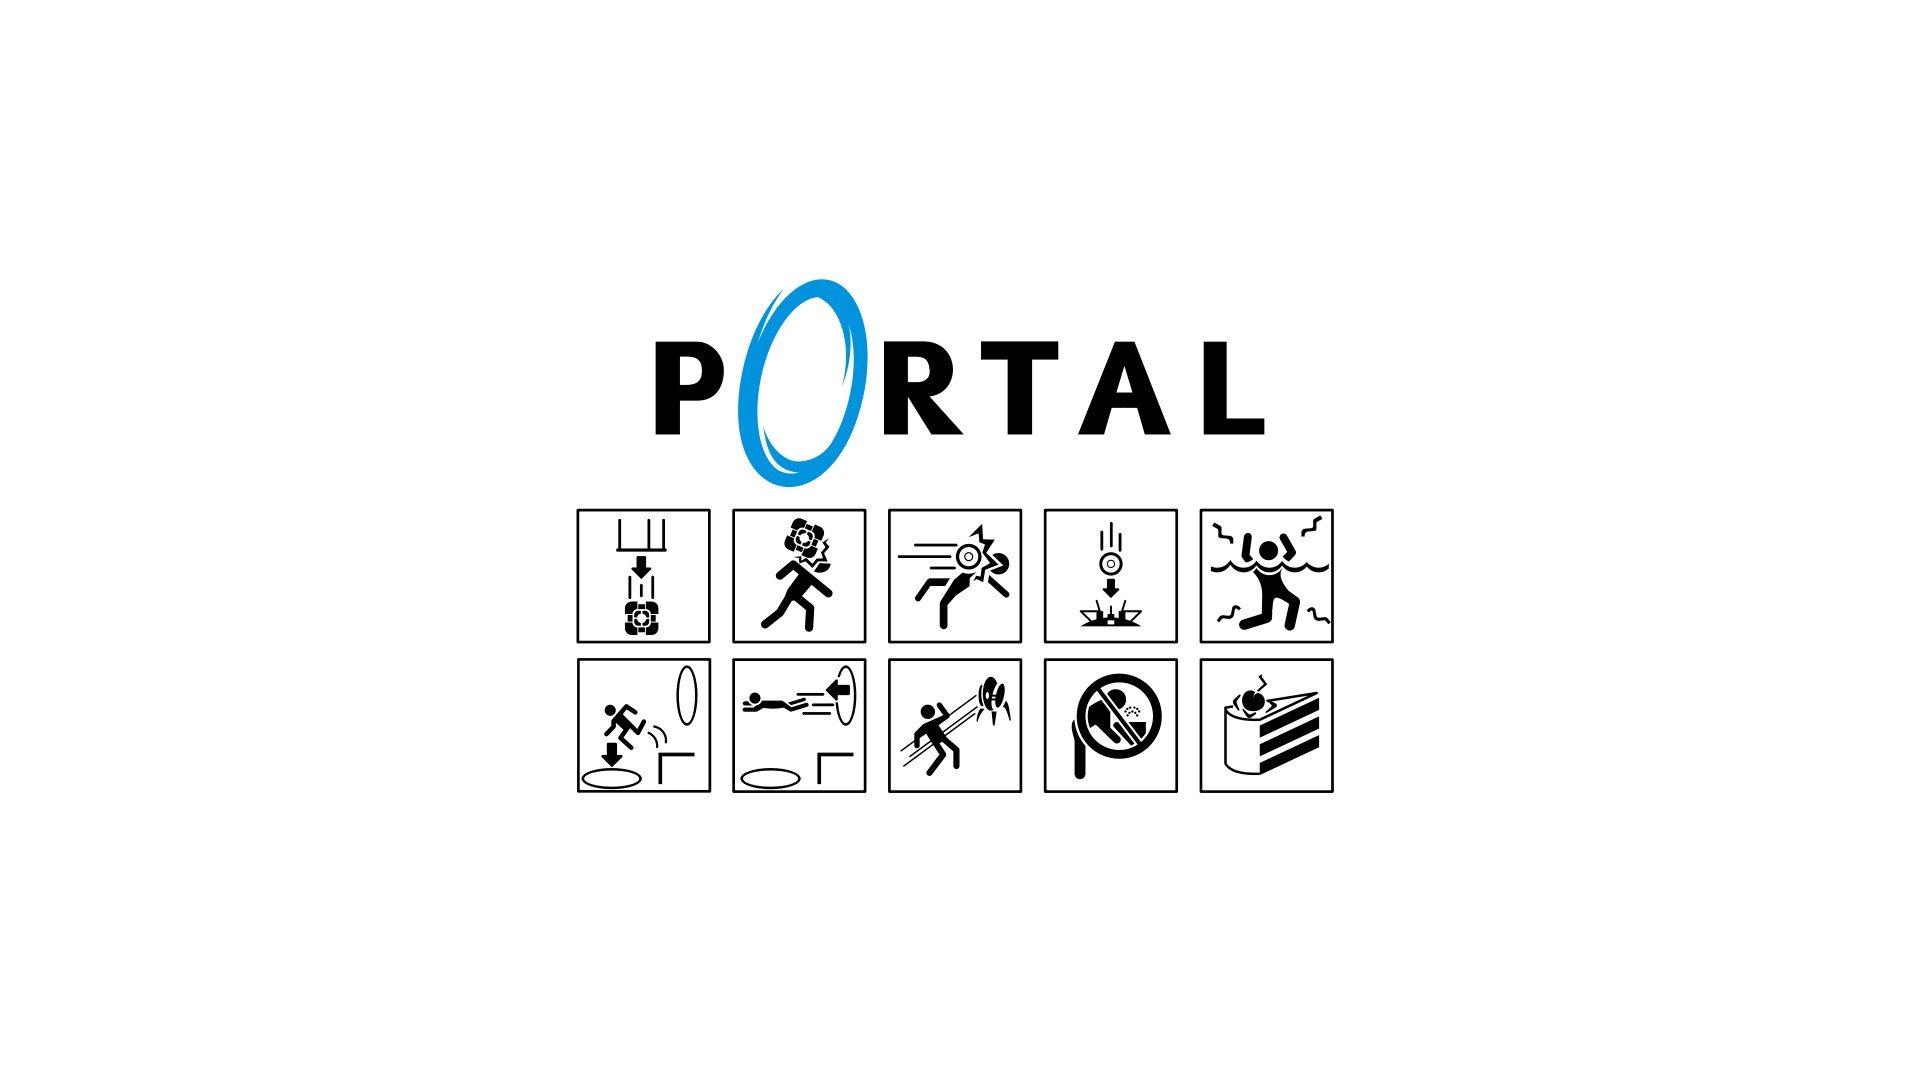 Portal (game), Video games Wallpaper